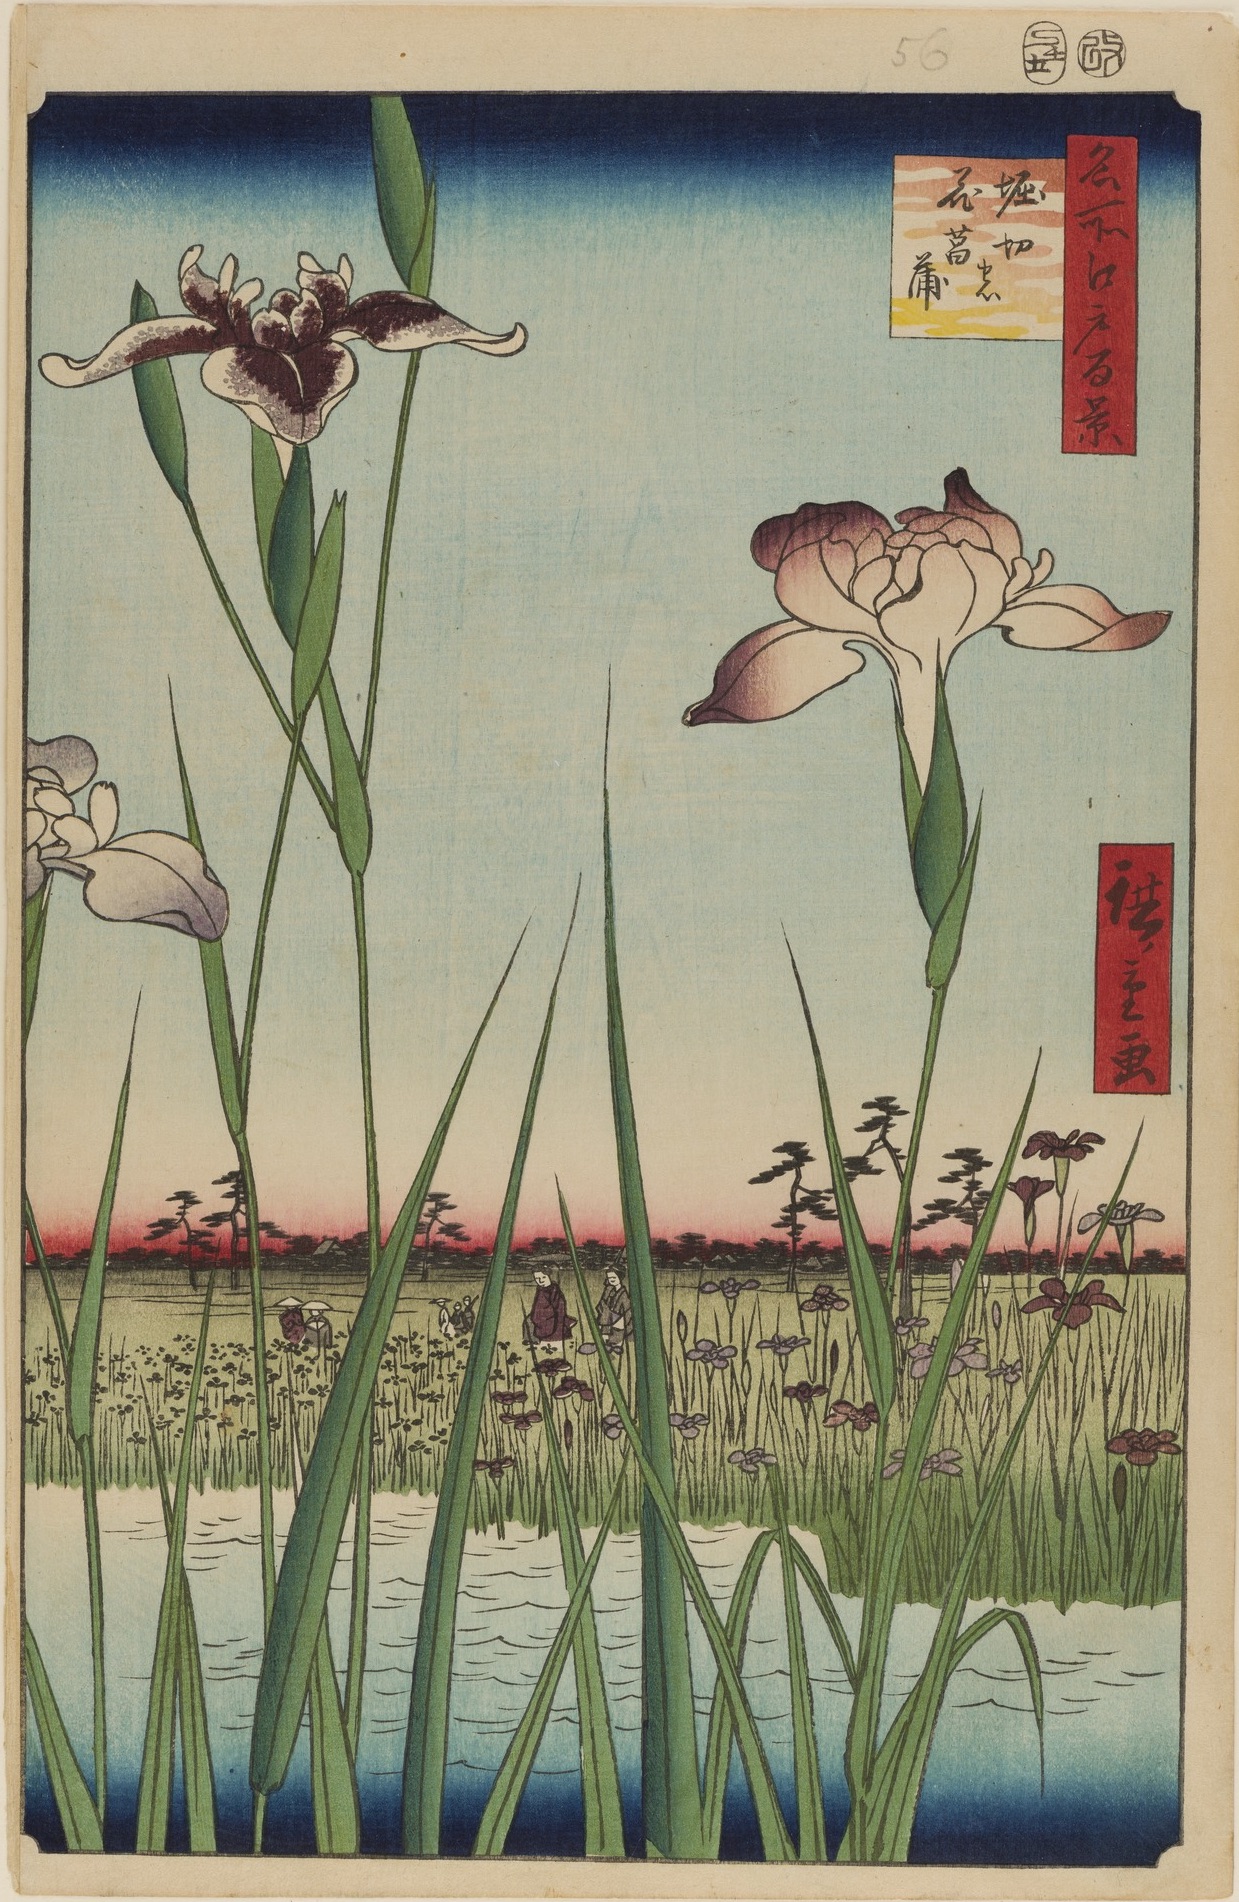 Horikiri Iris Garden by  Hiroshige - 1856 - 34 x 22.9 सेमी 